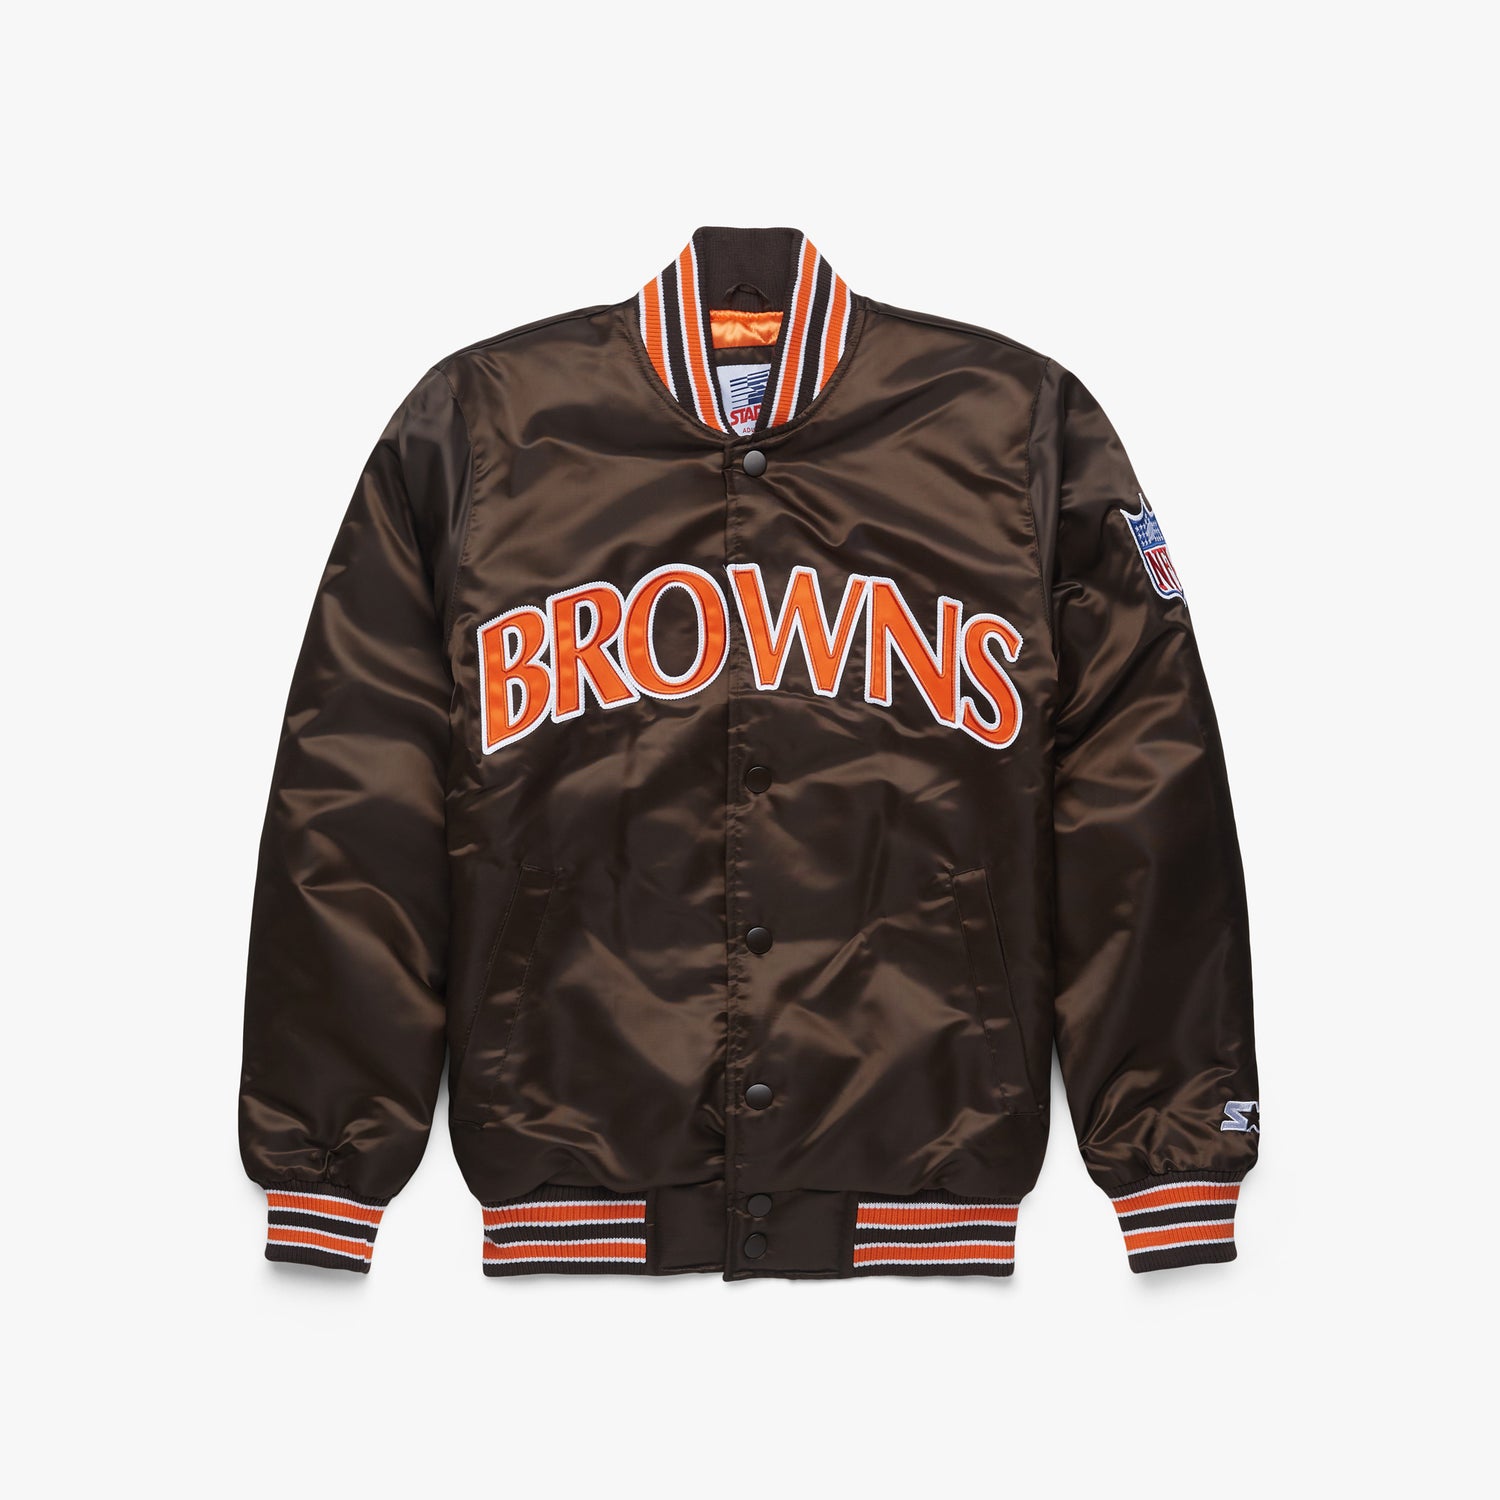 Homage x Starter Cleveland Browns Satin Jacket from Homage. Officially Licensed NFL Apparel. Shop Pro 80's Starter, Gameday, & Bomber Jackets.